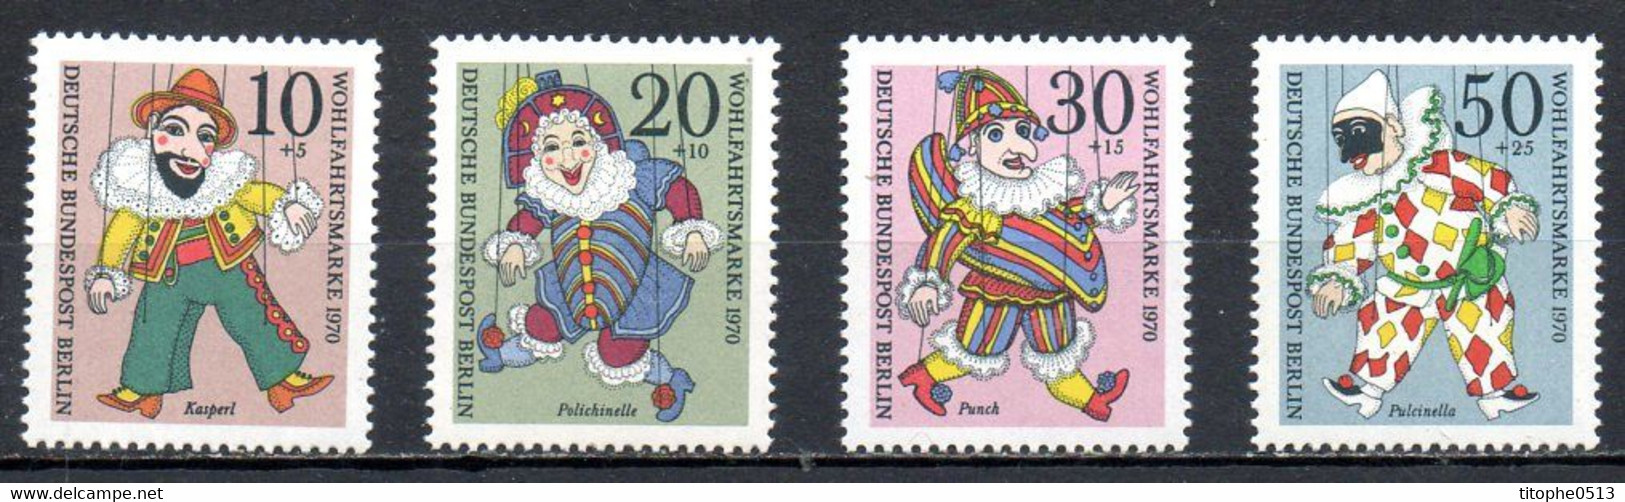 ALLEMAGNE BERLIN. N°335-8 De 1970. Marionnettes. - Marionetten